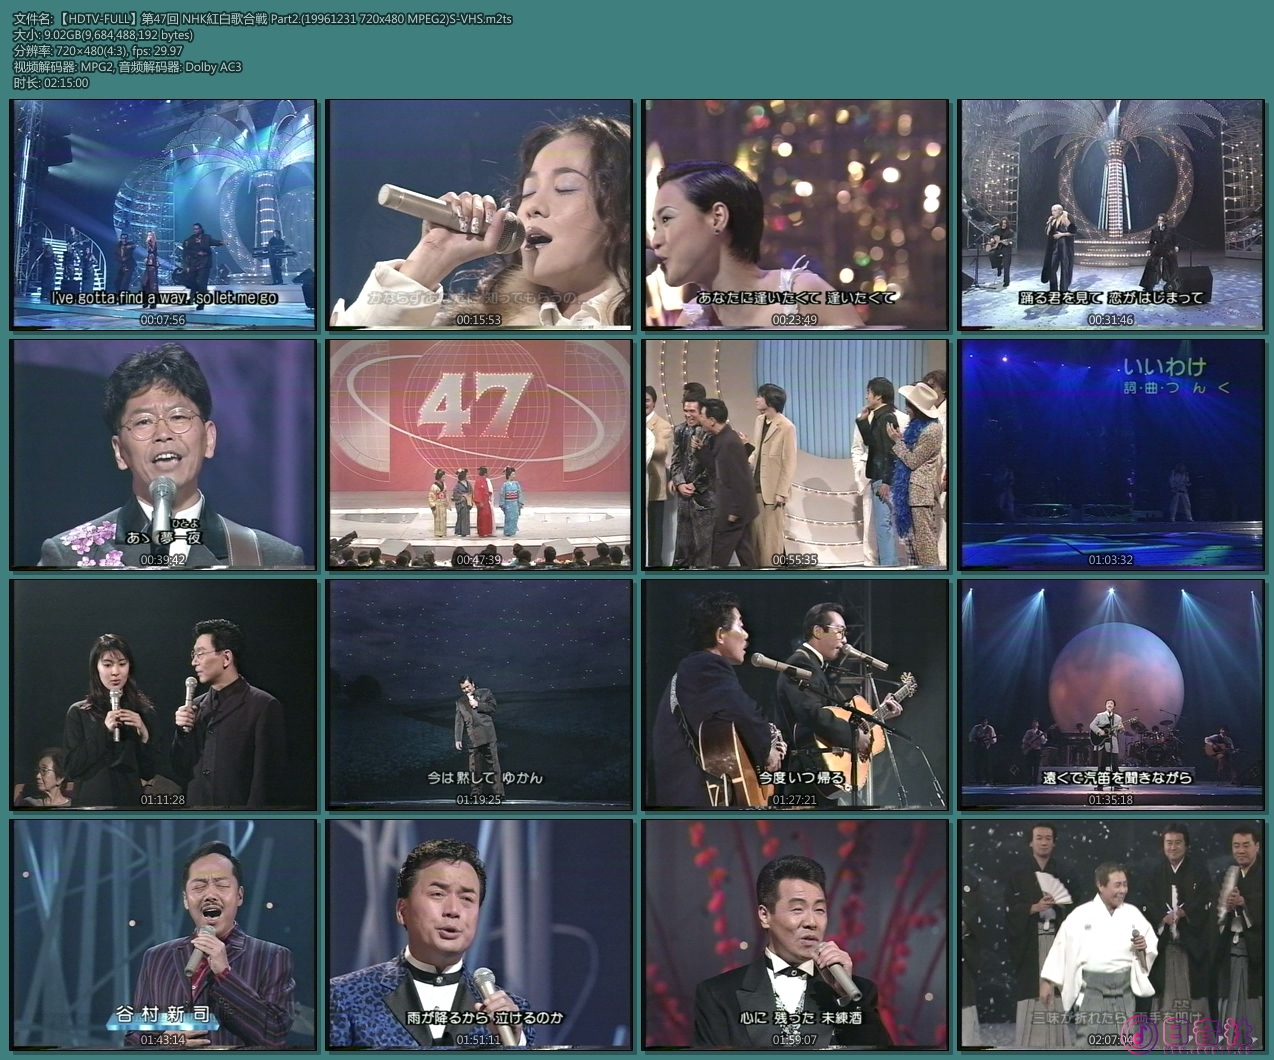 【HDTV-FULL】第47回 NHK紅白歌合戦 Part2.(19961231 720x480 MPEG2)S-VHS.m2ts.jpg